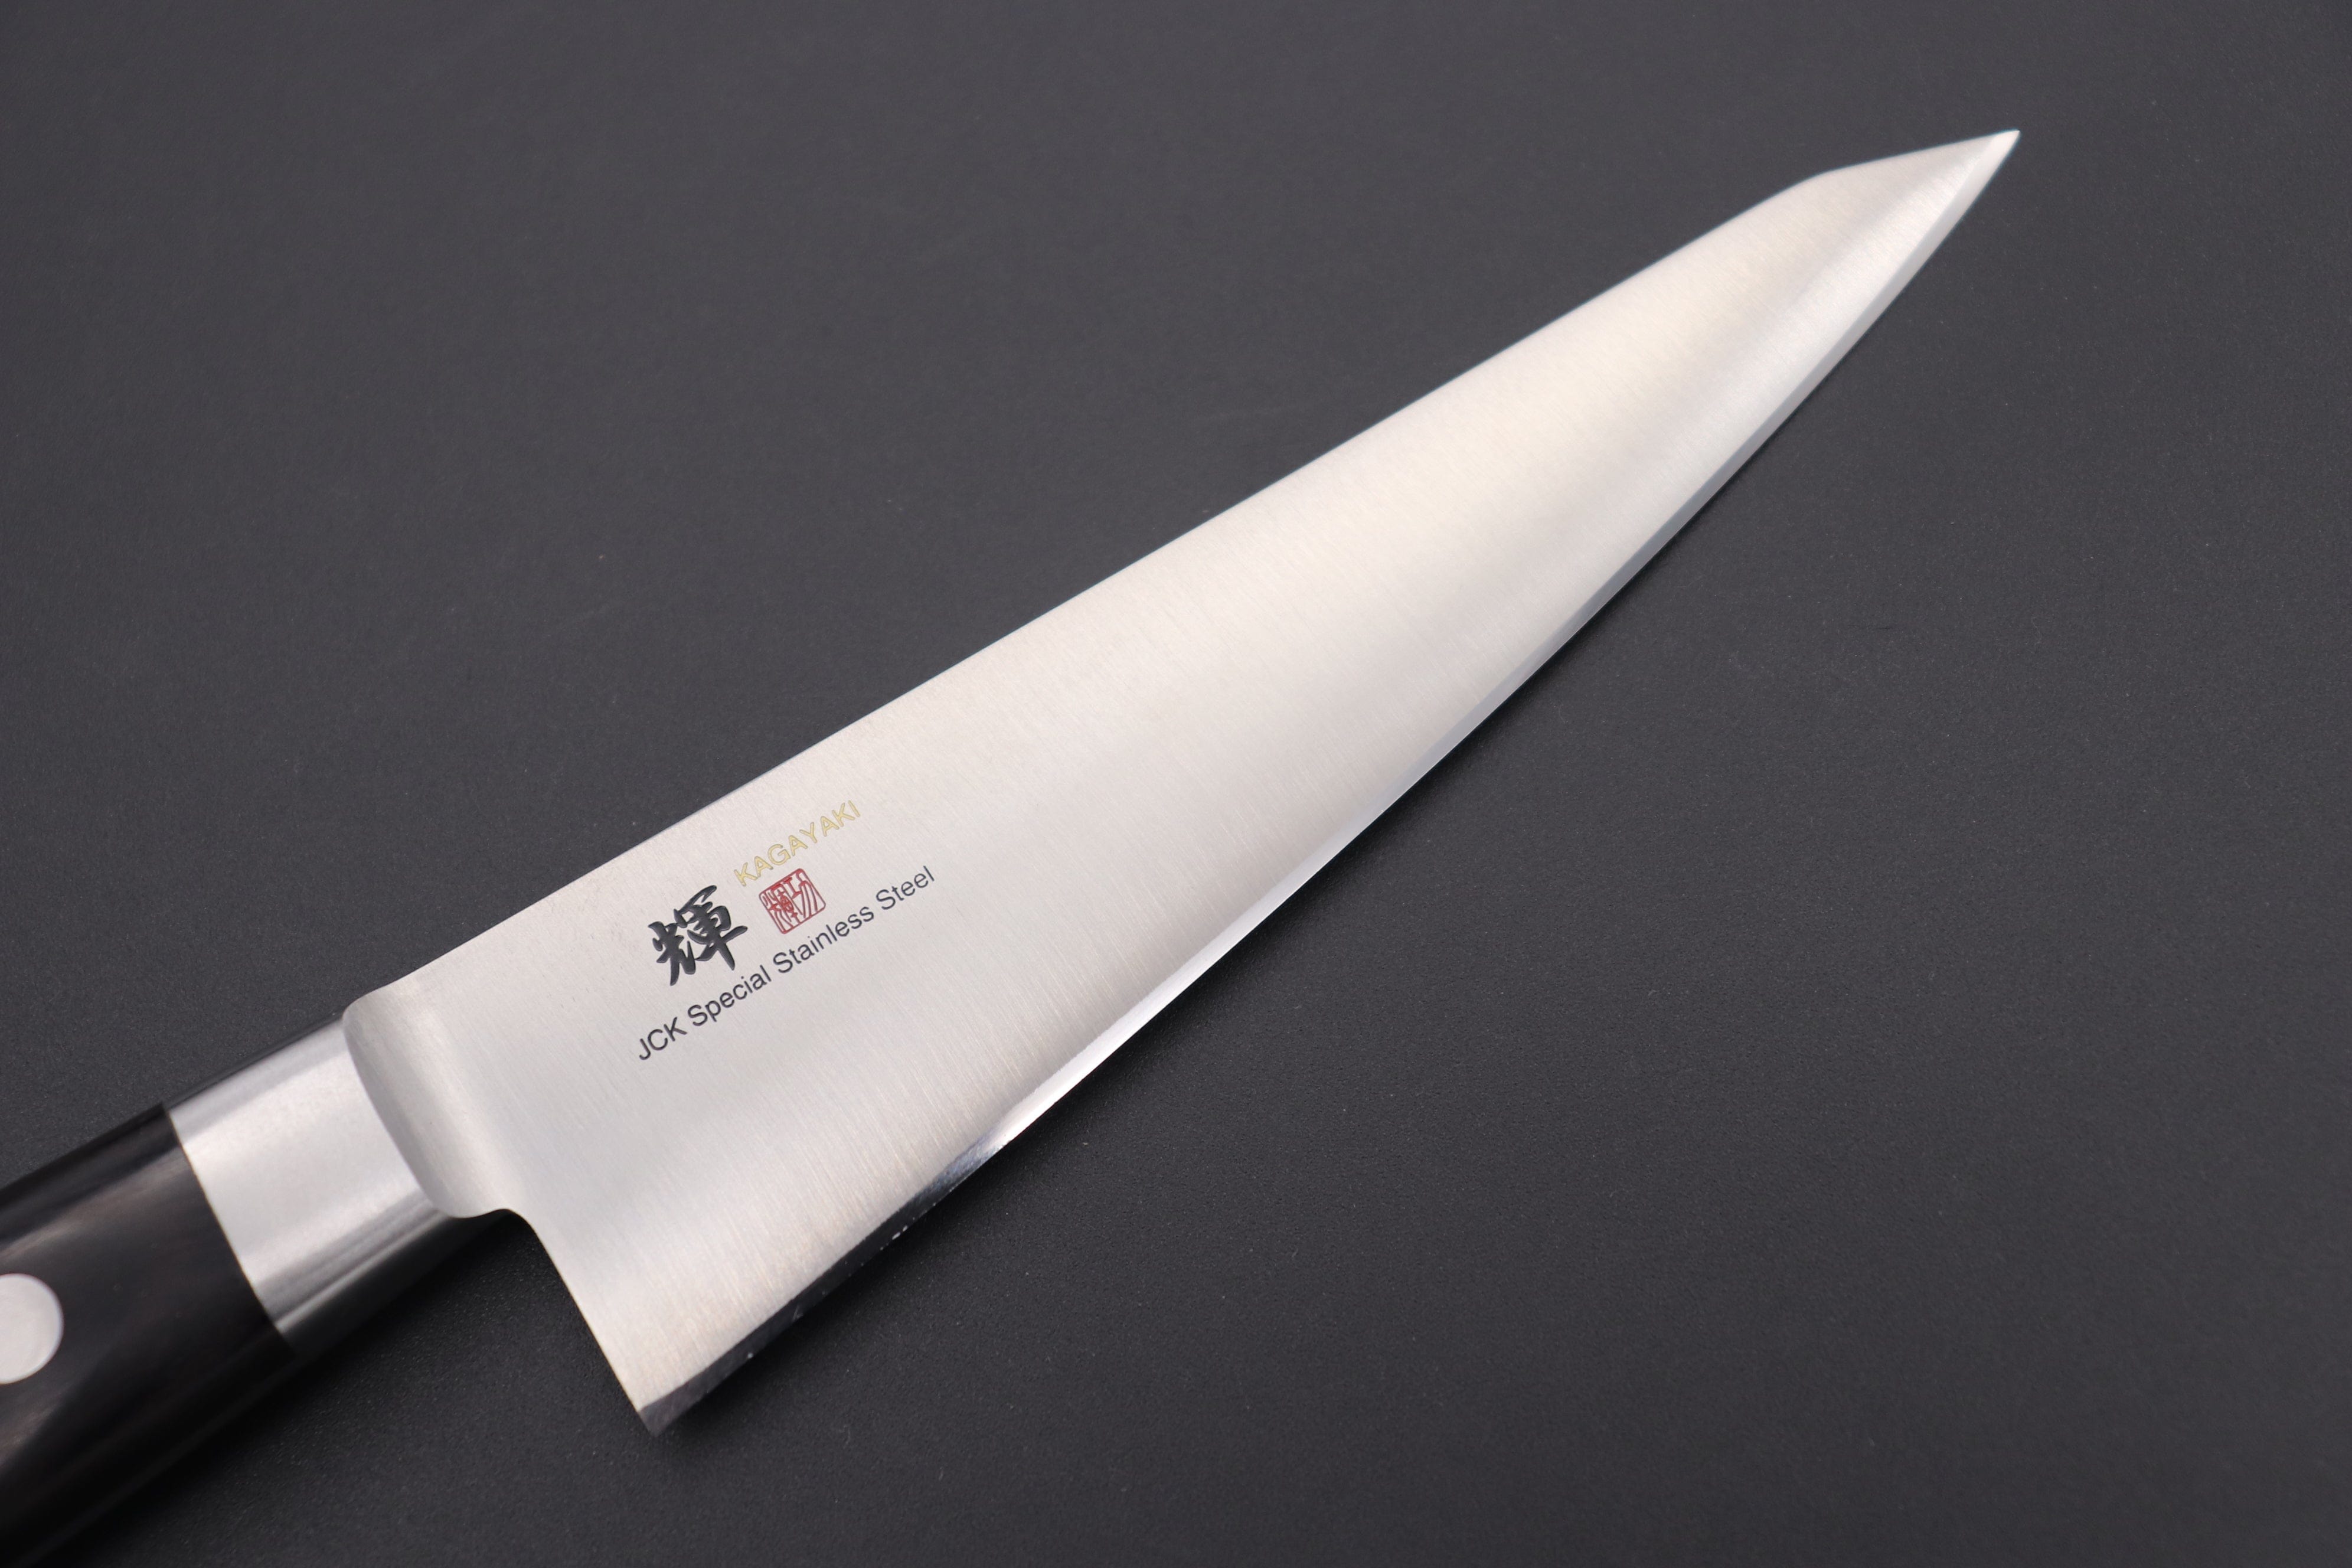 10 Best Boning Knives and Fillet Knives of 2024 - Reviewed